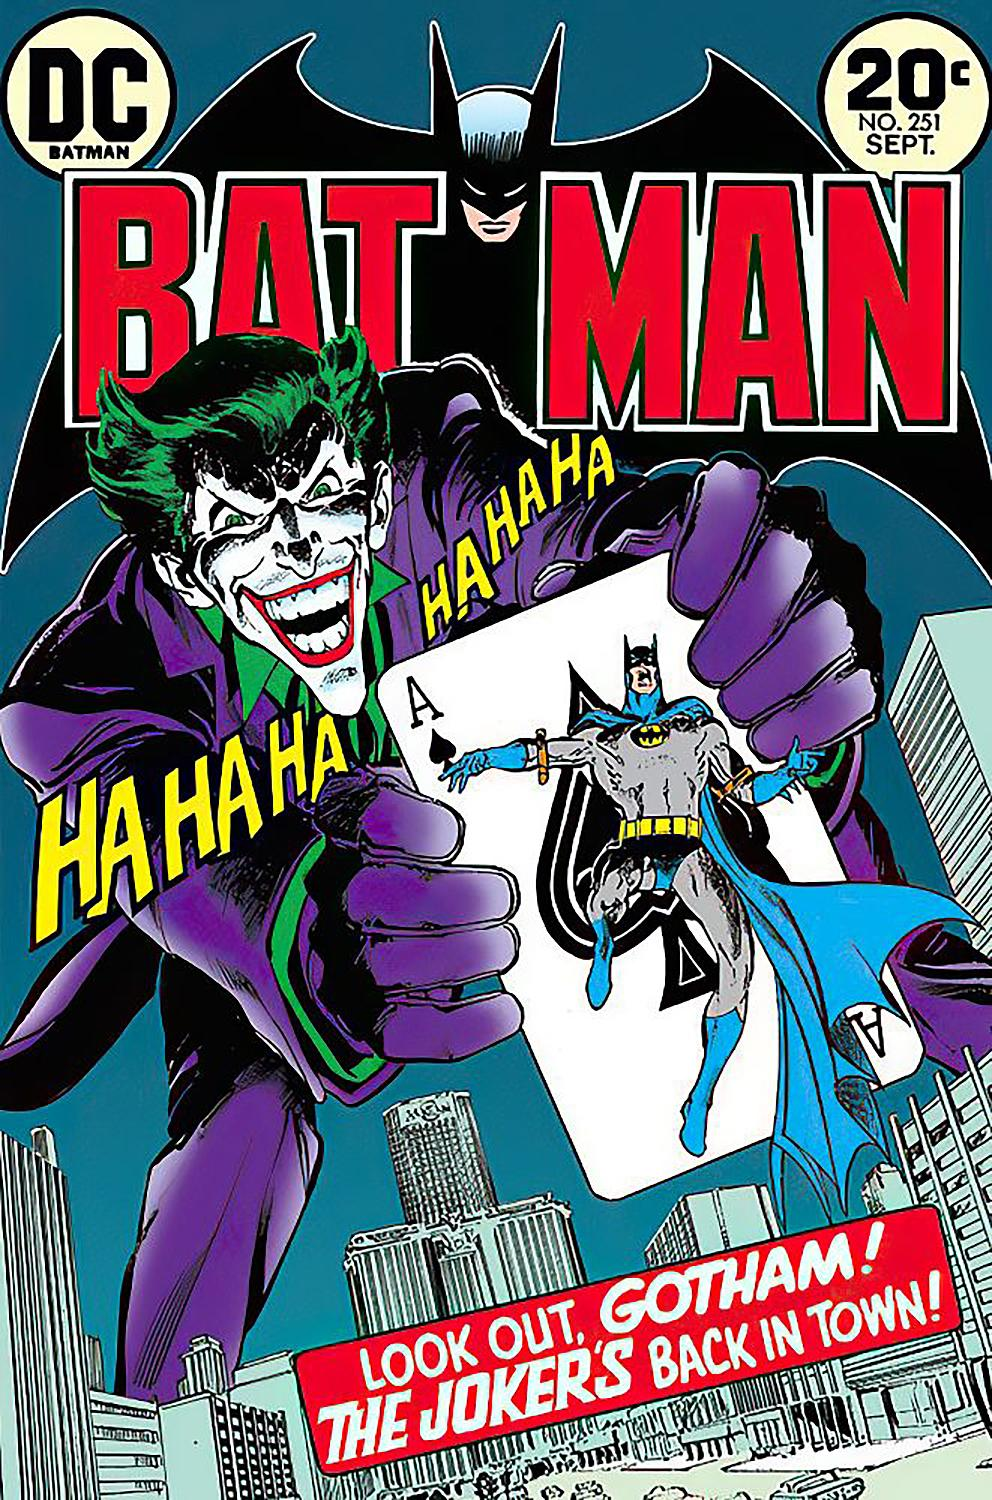 Town! Batman Poster PYRAMID Cover INTERNATIONAL The Back Joker\'s in Comic